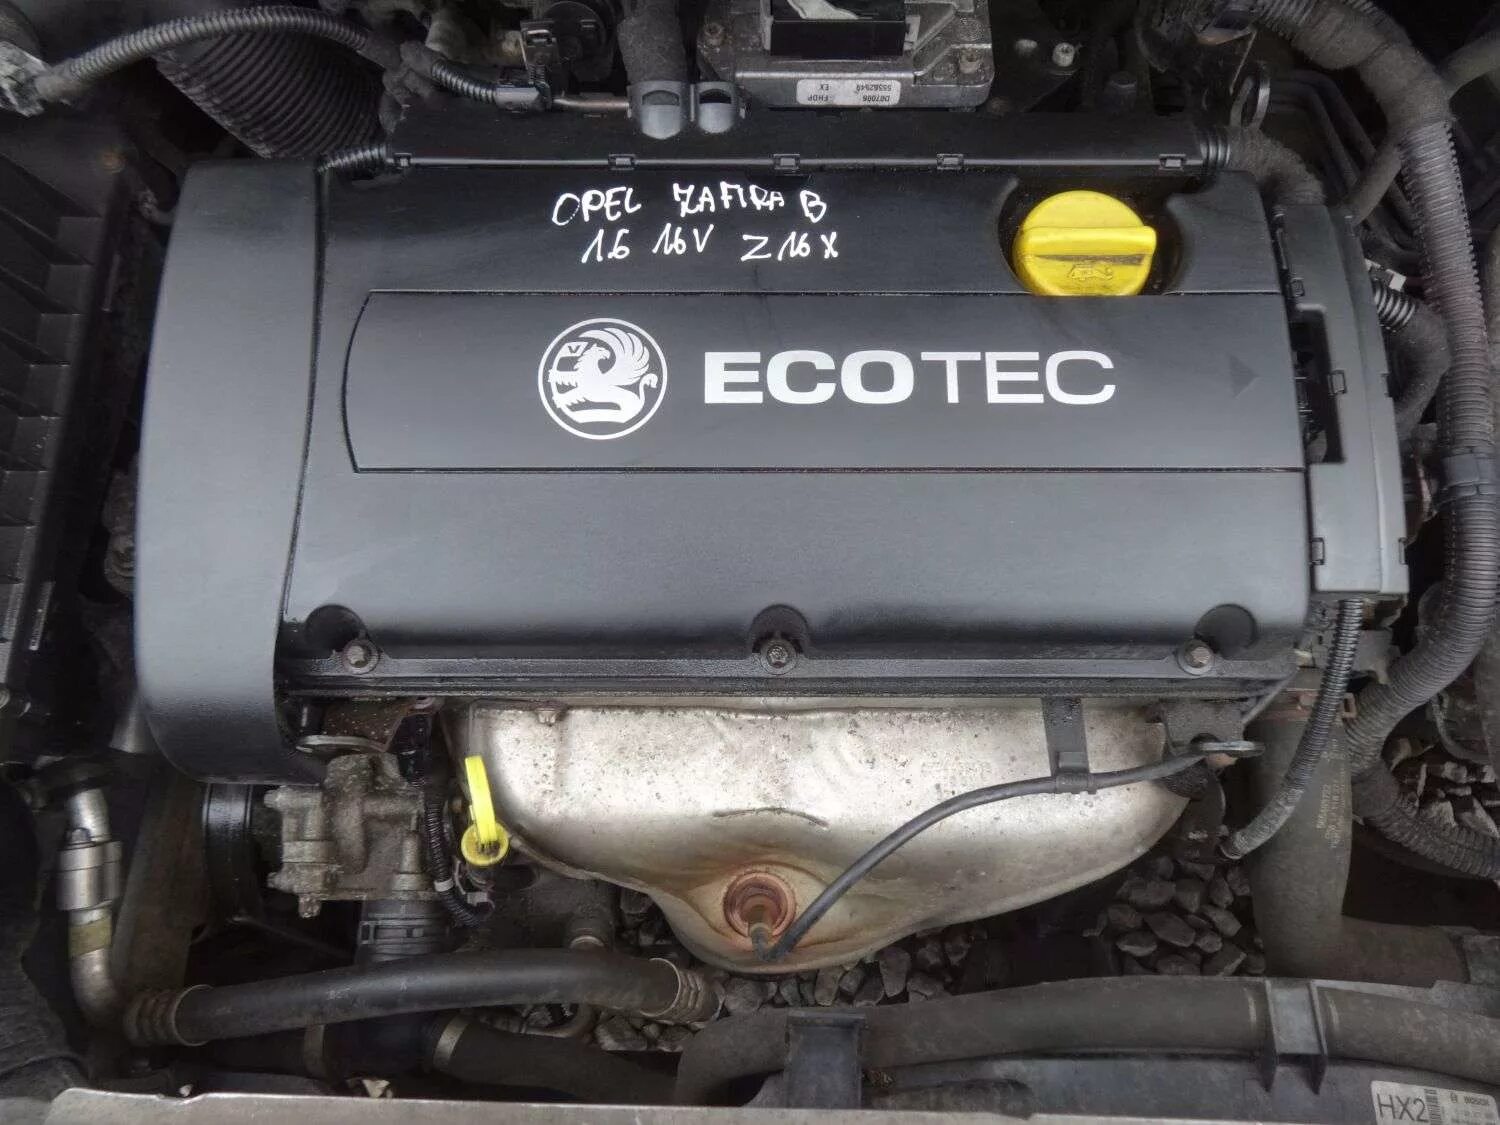 Opel ECOTEC 1.6 z16xe.